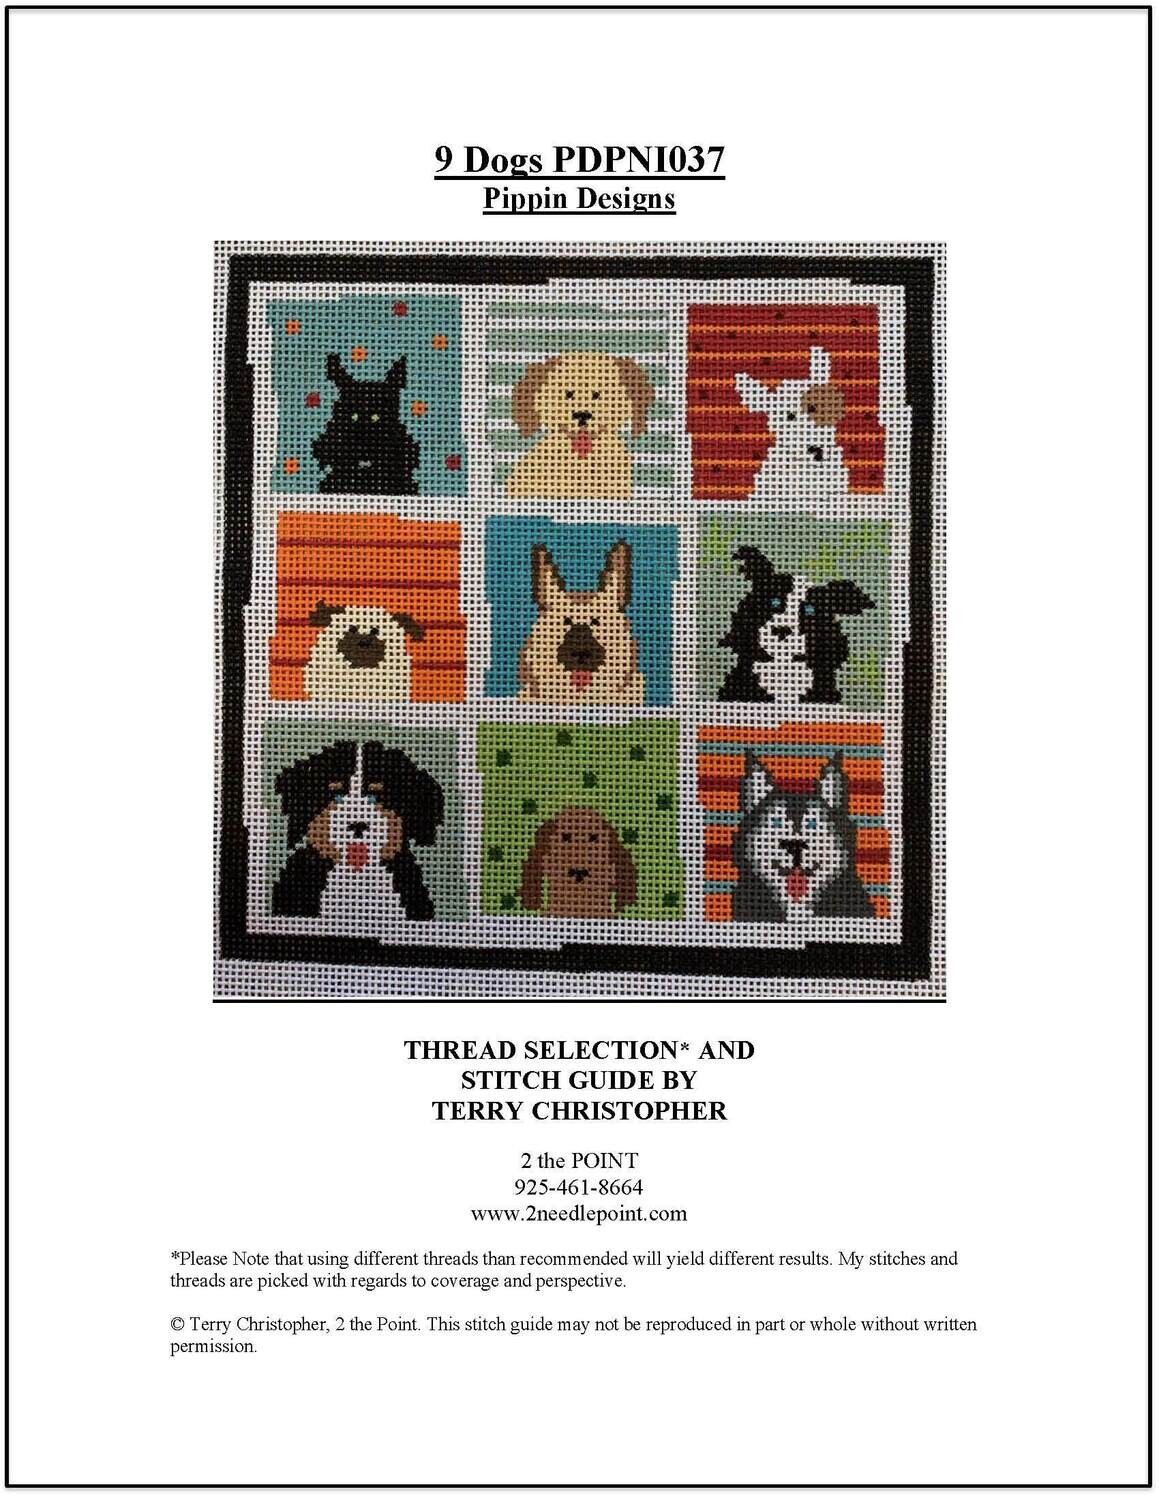 Pippin Designs, 9 Dogs Stitch Guide PDPNI037